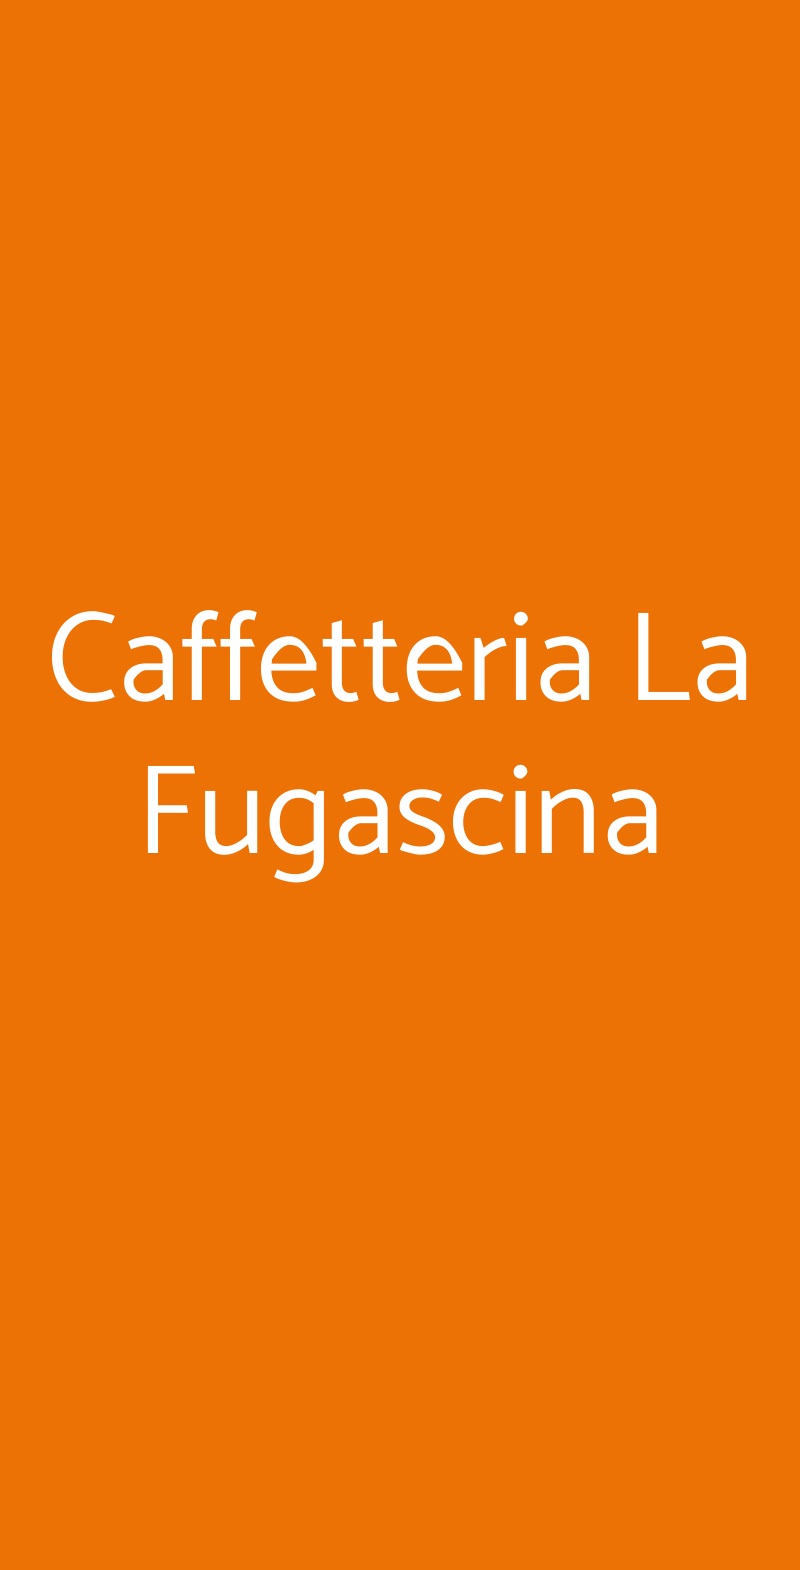 Caffetteria La Fugascina Mergozzo menù 1 pagina